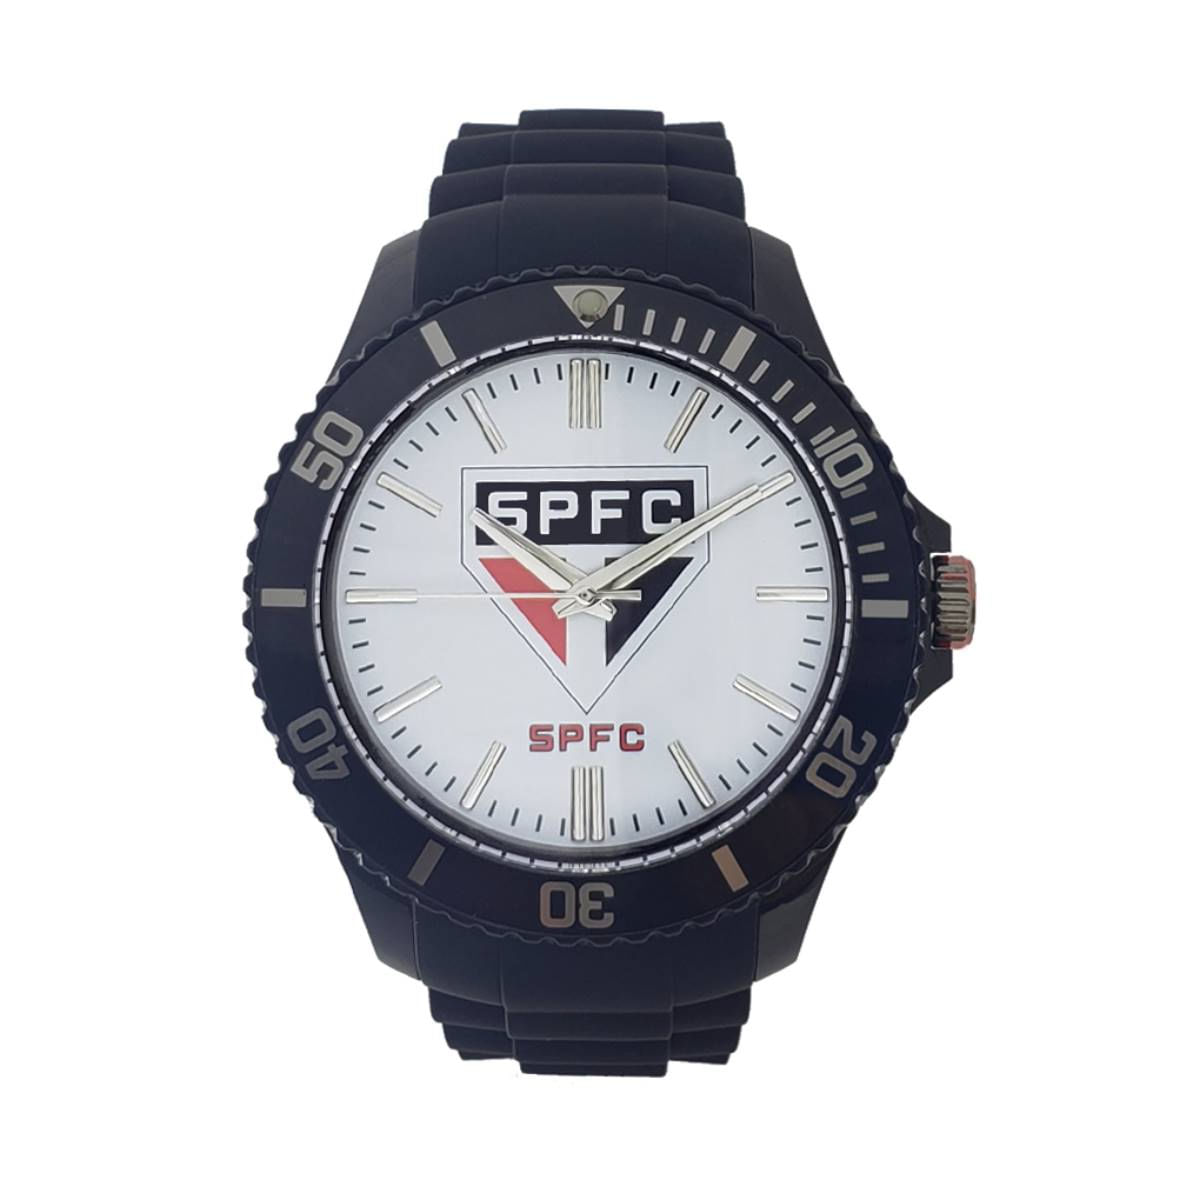 Relógio São Paulo Masculino Ref: Spfc-004-3 Futebol Tricolor